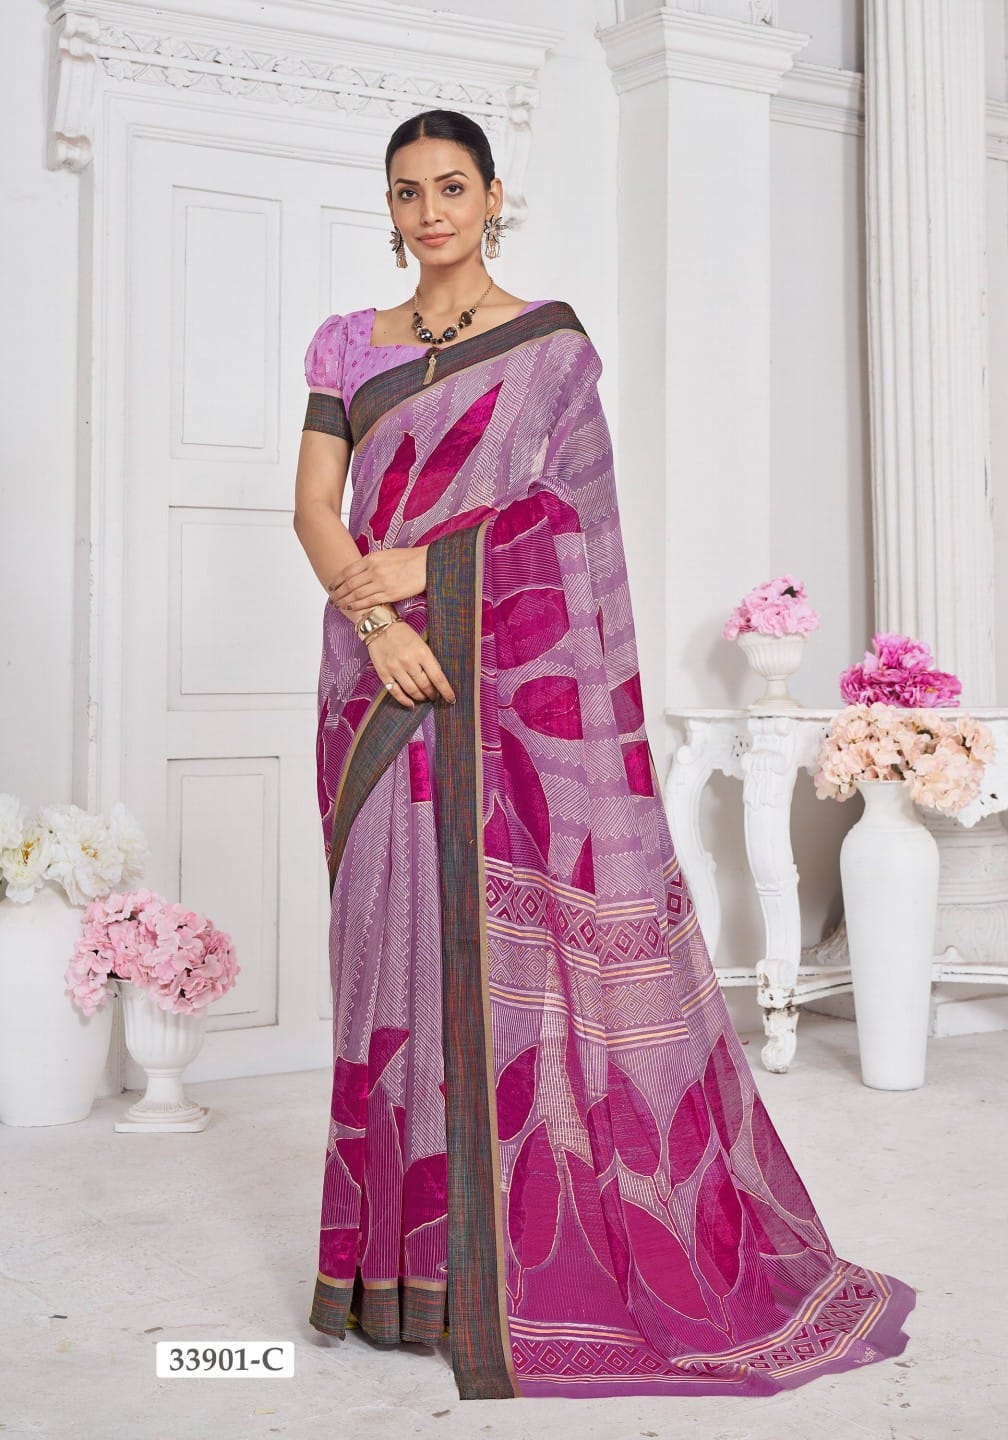 Vidhya Ruchi Soft Linen Sarees Manufacturer India